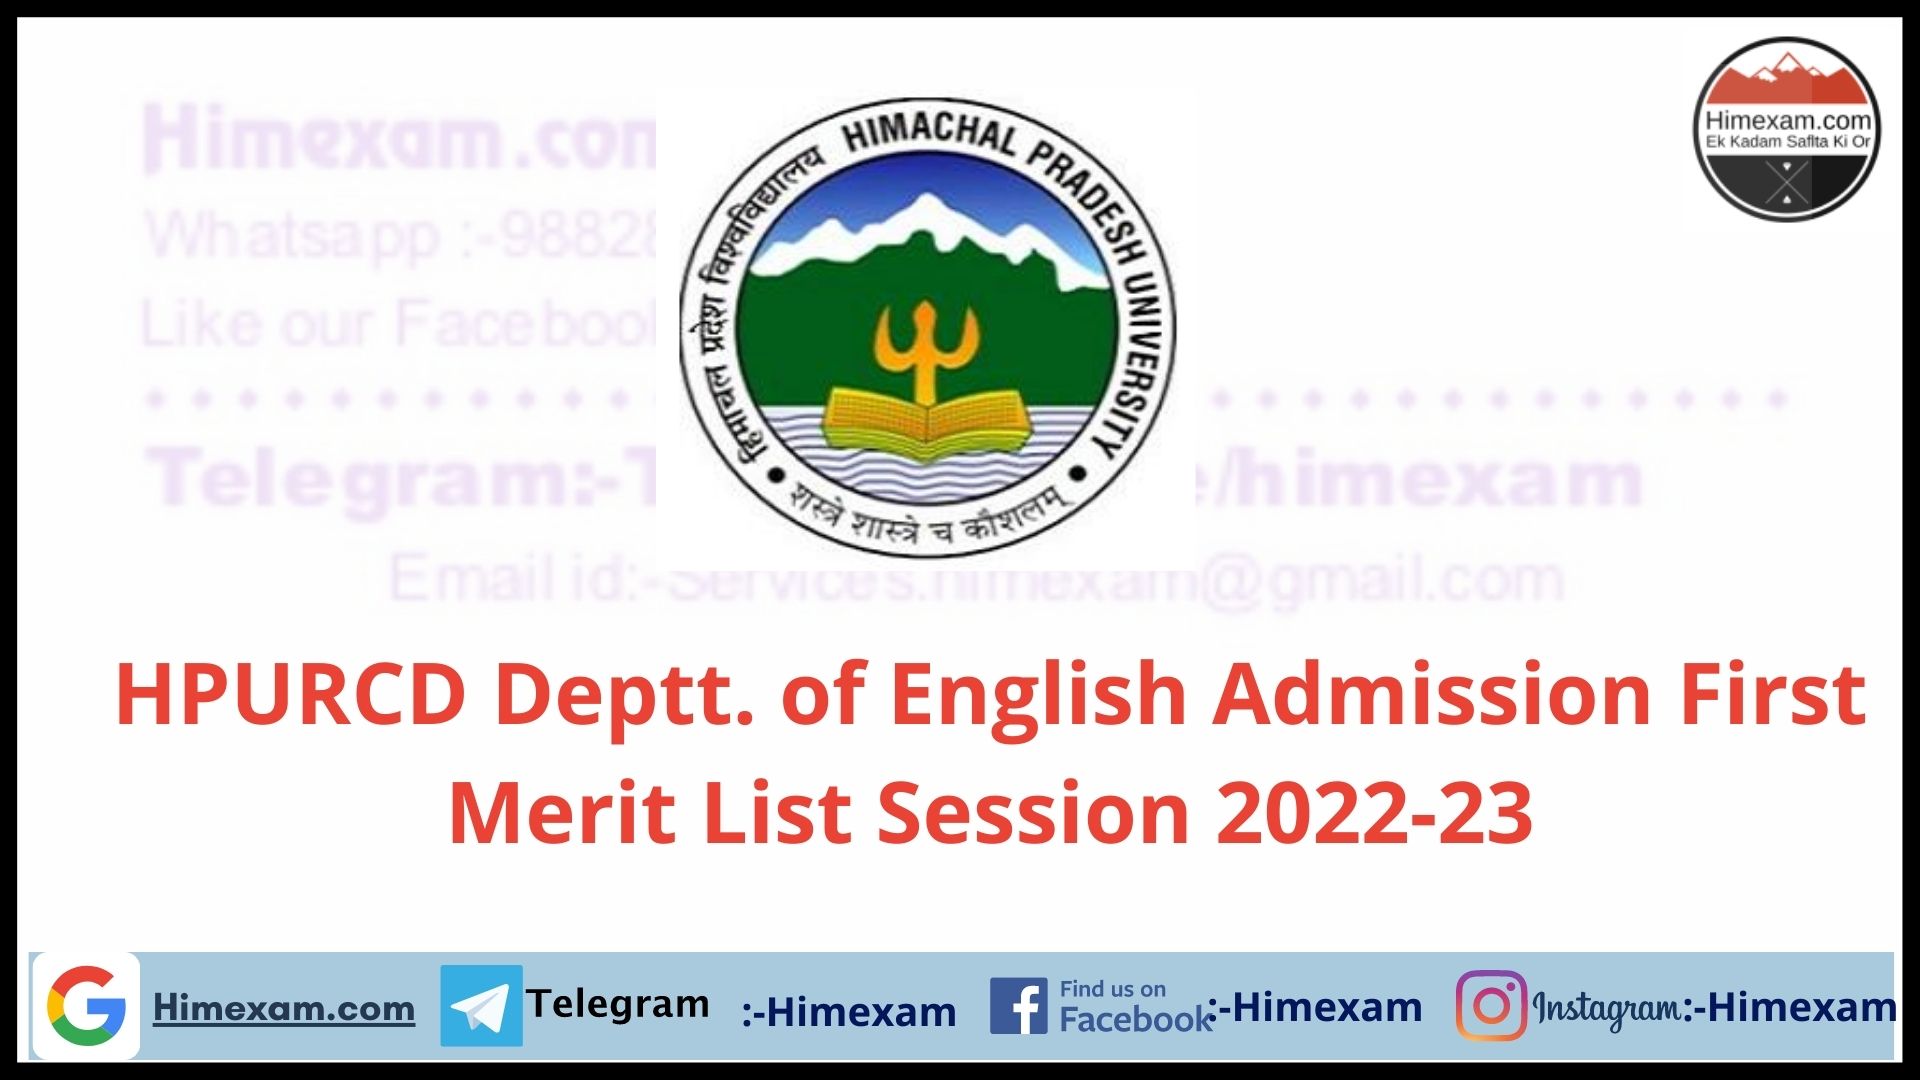 HPURCD Deptt. of English Admission First Merit List Session 2022-23